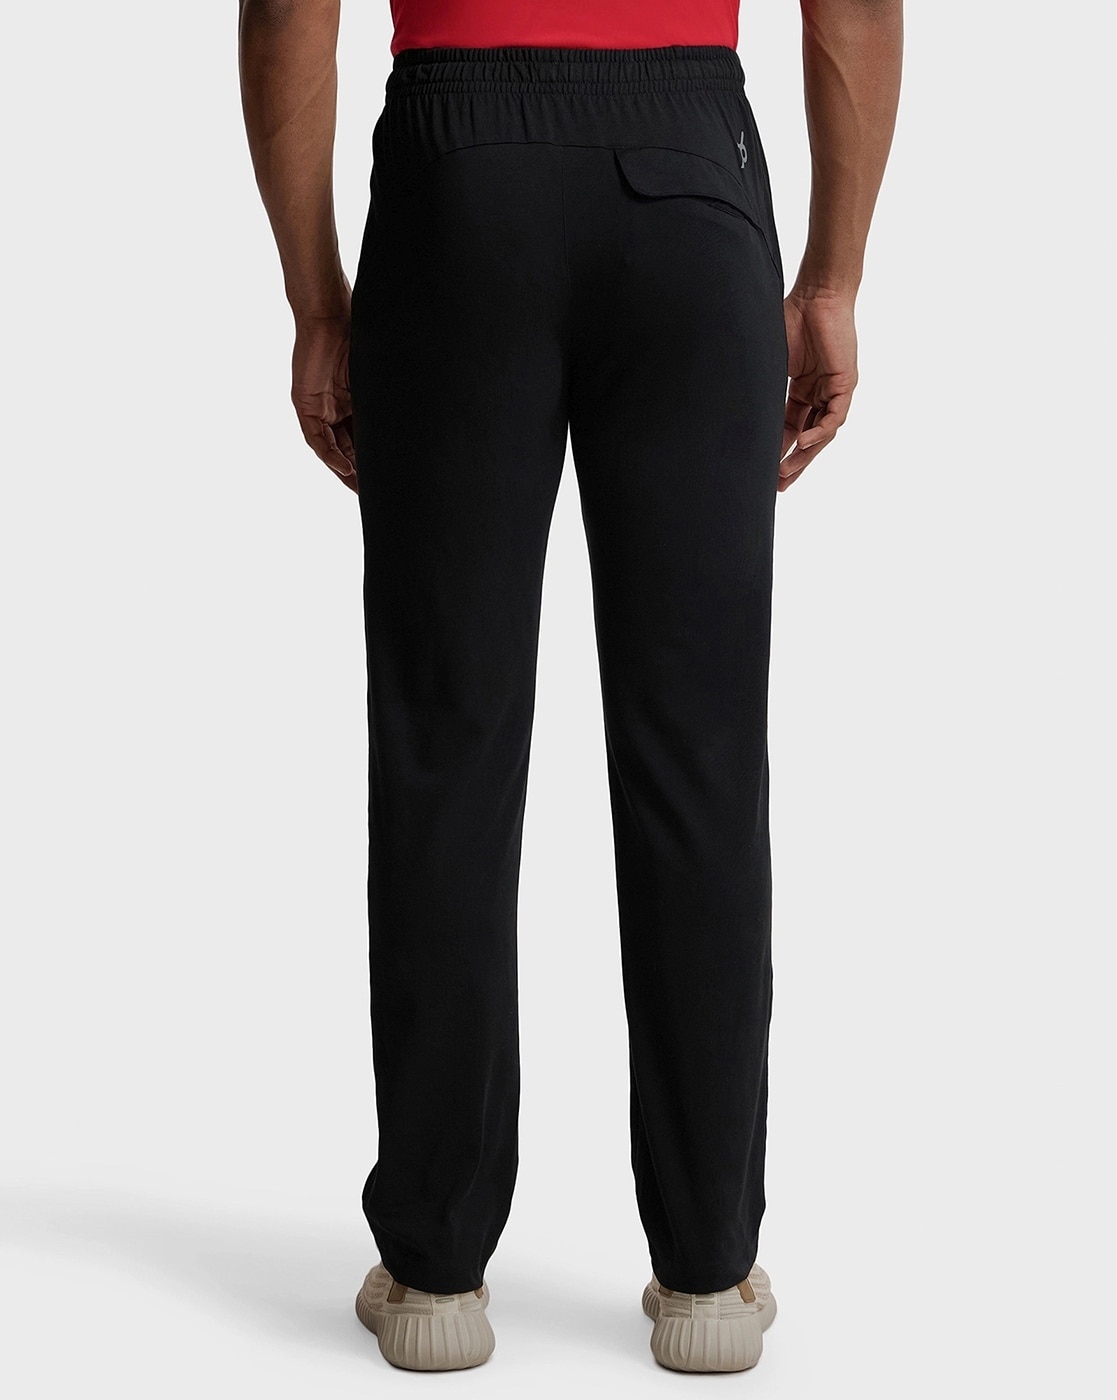 Buy Black Track Pants for Men by AJIO Online | Ajio.com